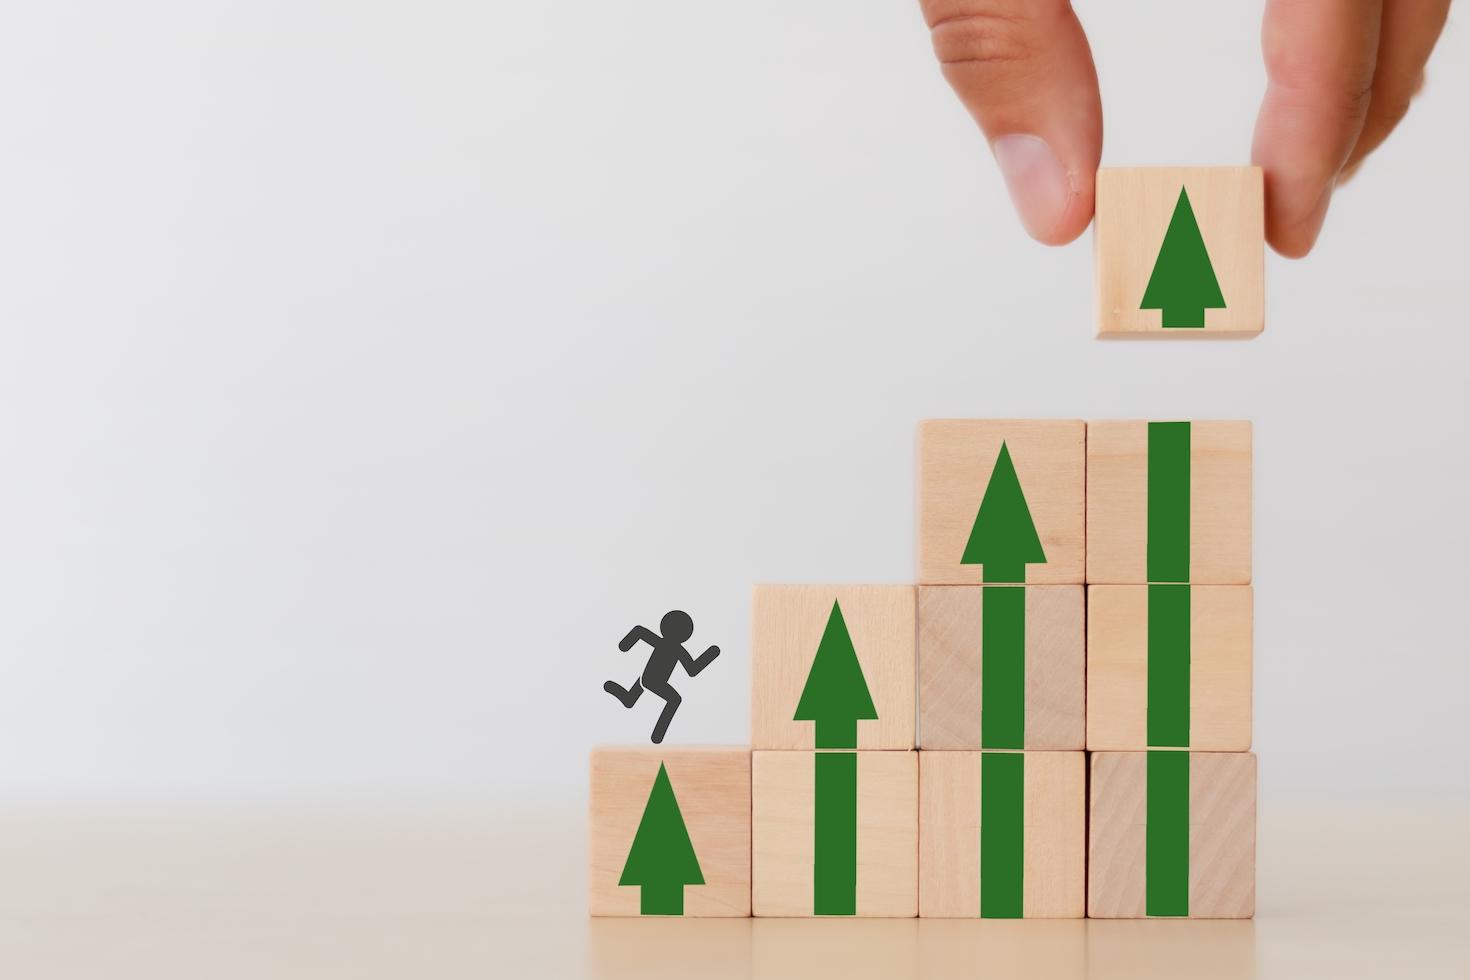 Stick figure climbing up stacked wooden blocks; upskilling, personal development concept